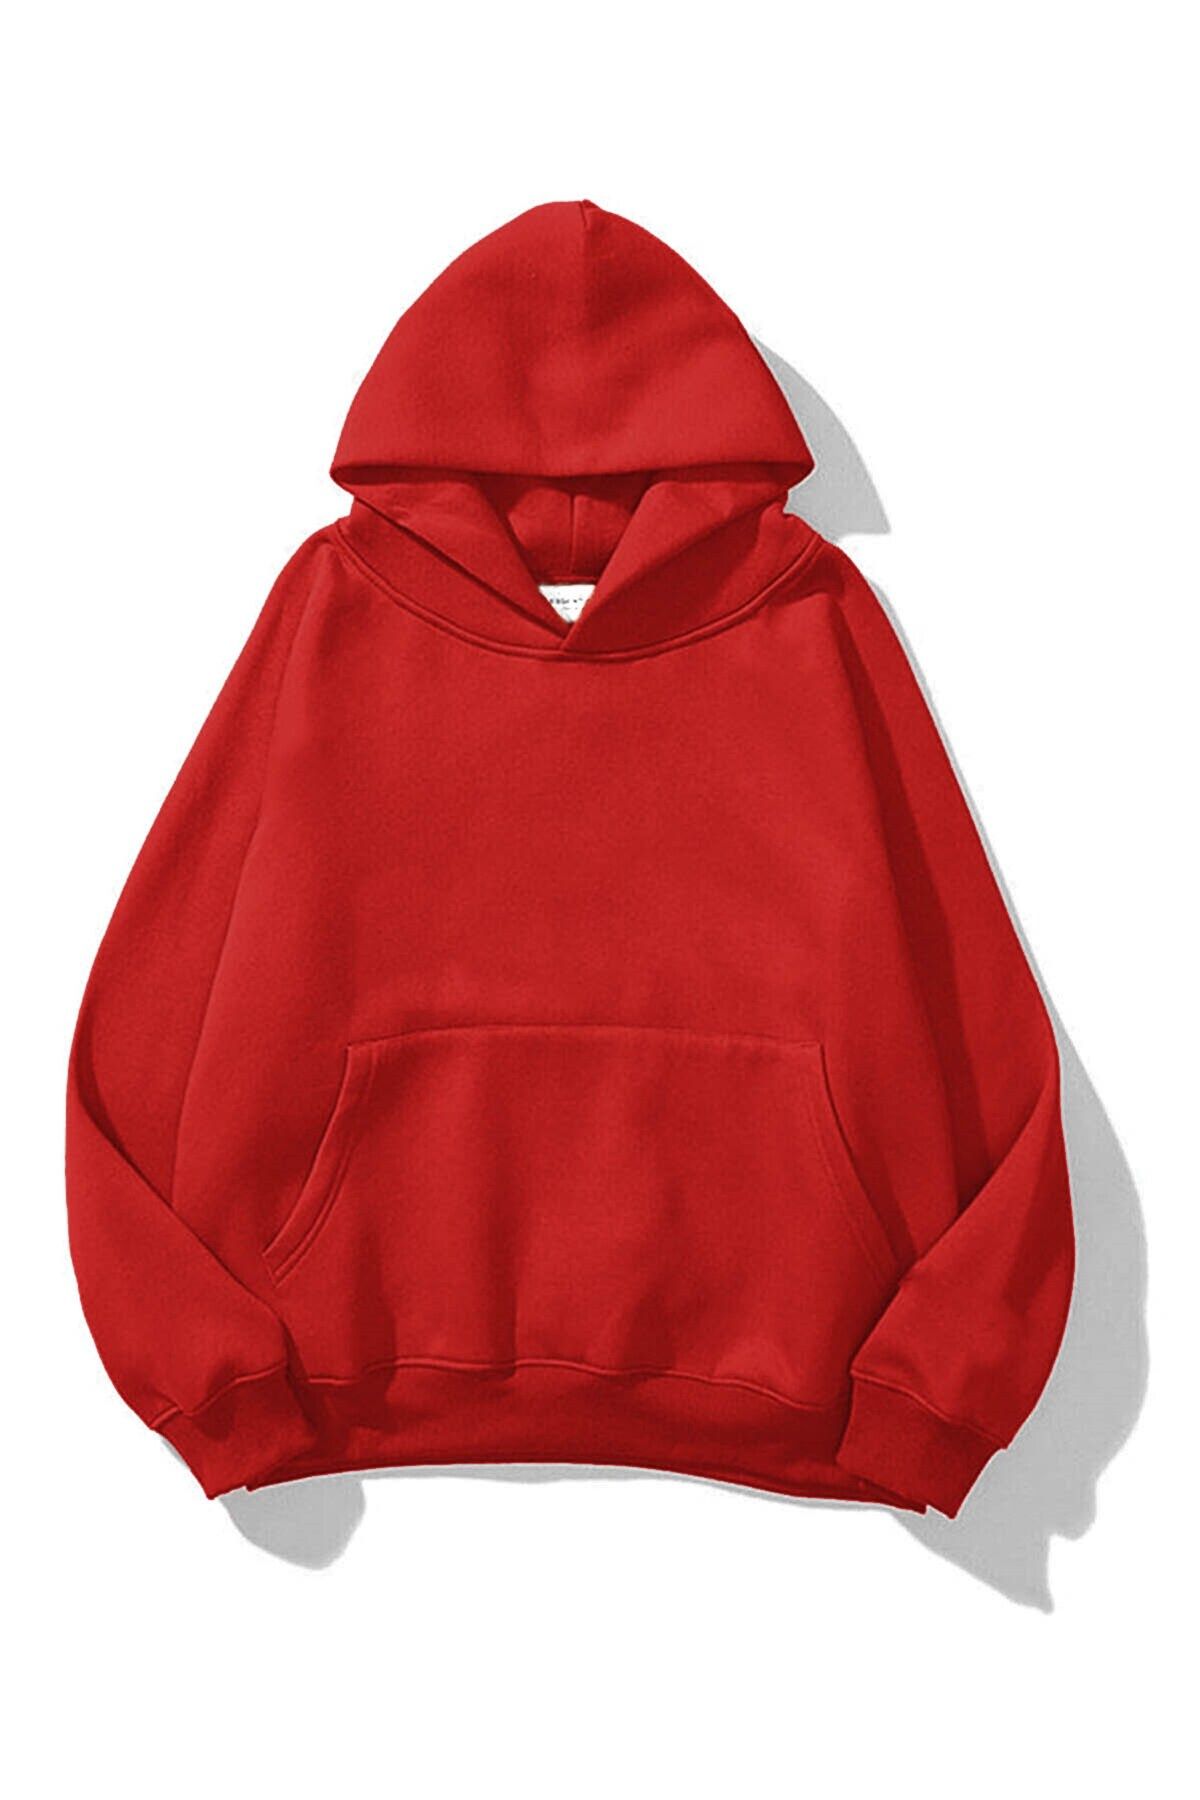 Trendiz Unisex Kırmızı Basic Sweatshirt Hoodie